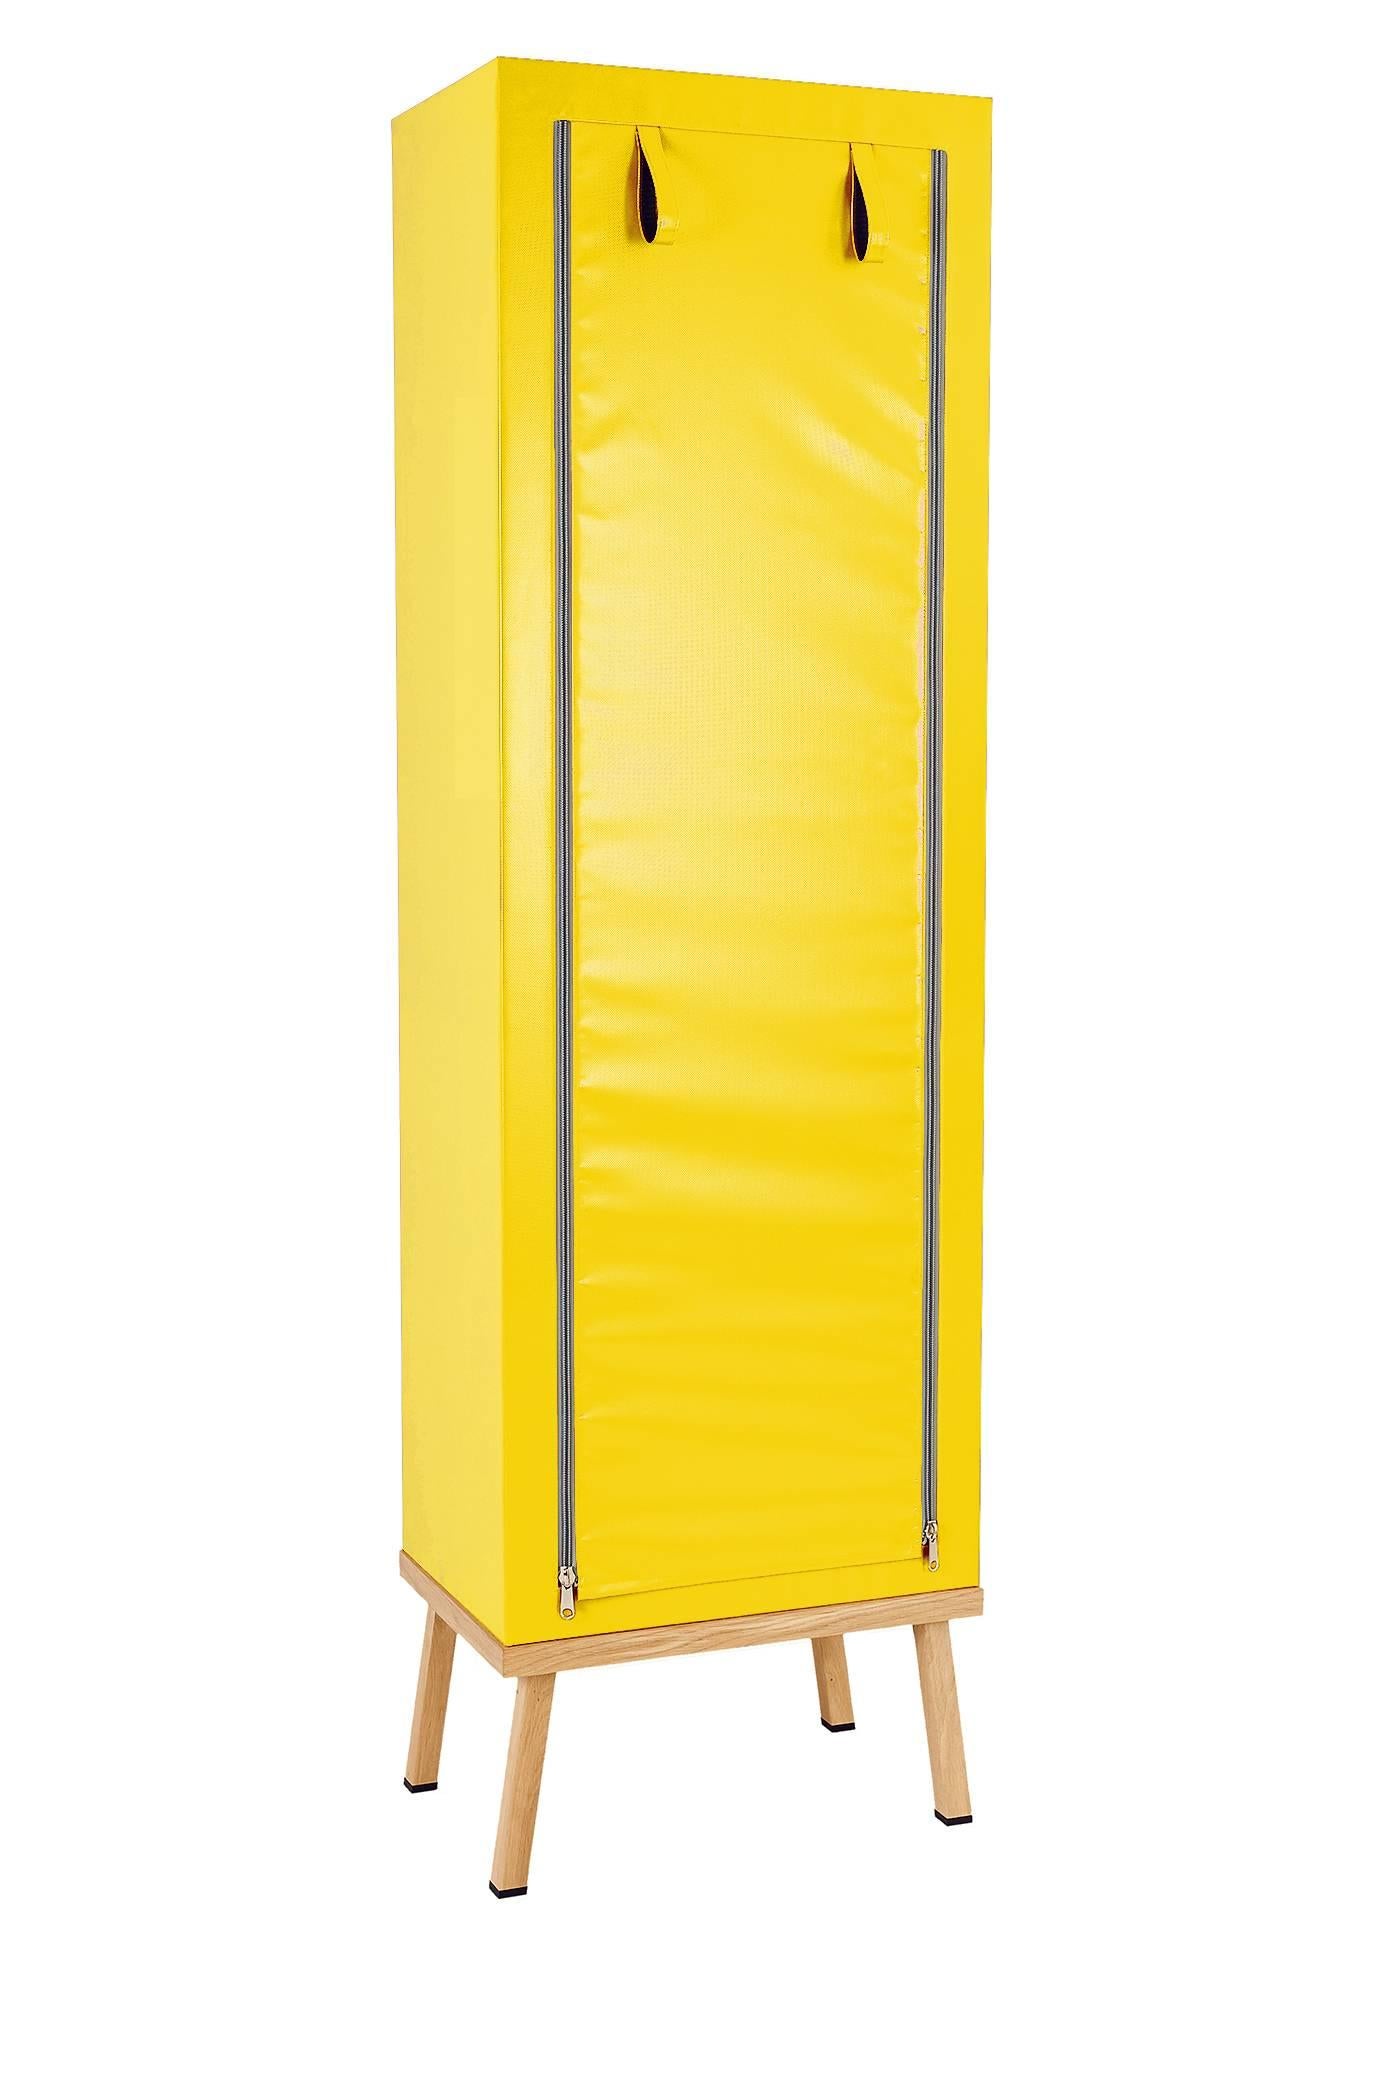 Visser and Meijwaard truecolors cabinet in yellow PVC cloth with zipper opening

Designed by Visser en Meijwaard 
Contemporary, Netherlands, 2015
PVC cloth, oakwood, rubber
Measure: H 78.75 in, W 23.75 in, D 15.75 in 

Lead time 8-10 weeks.